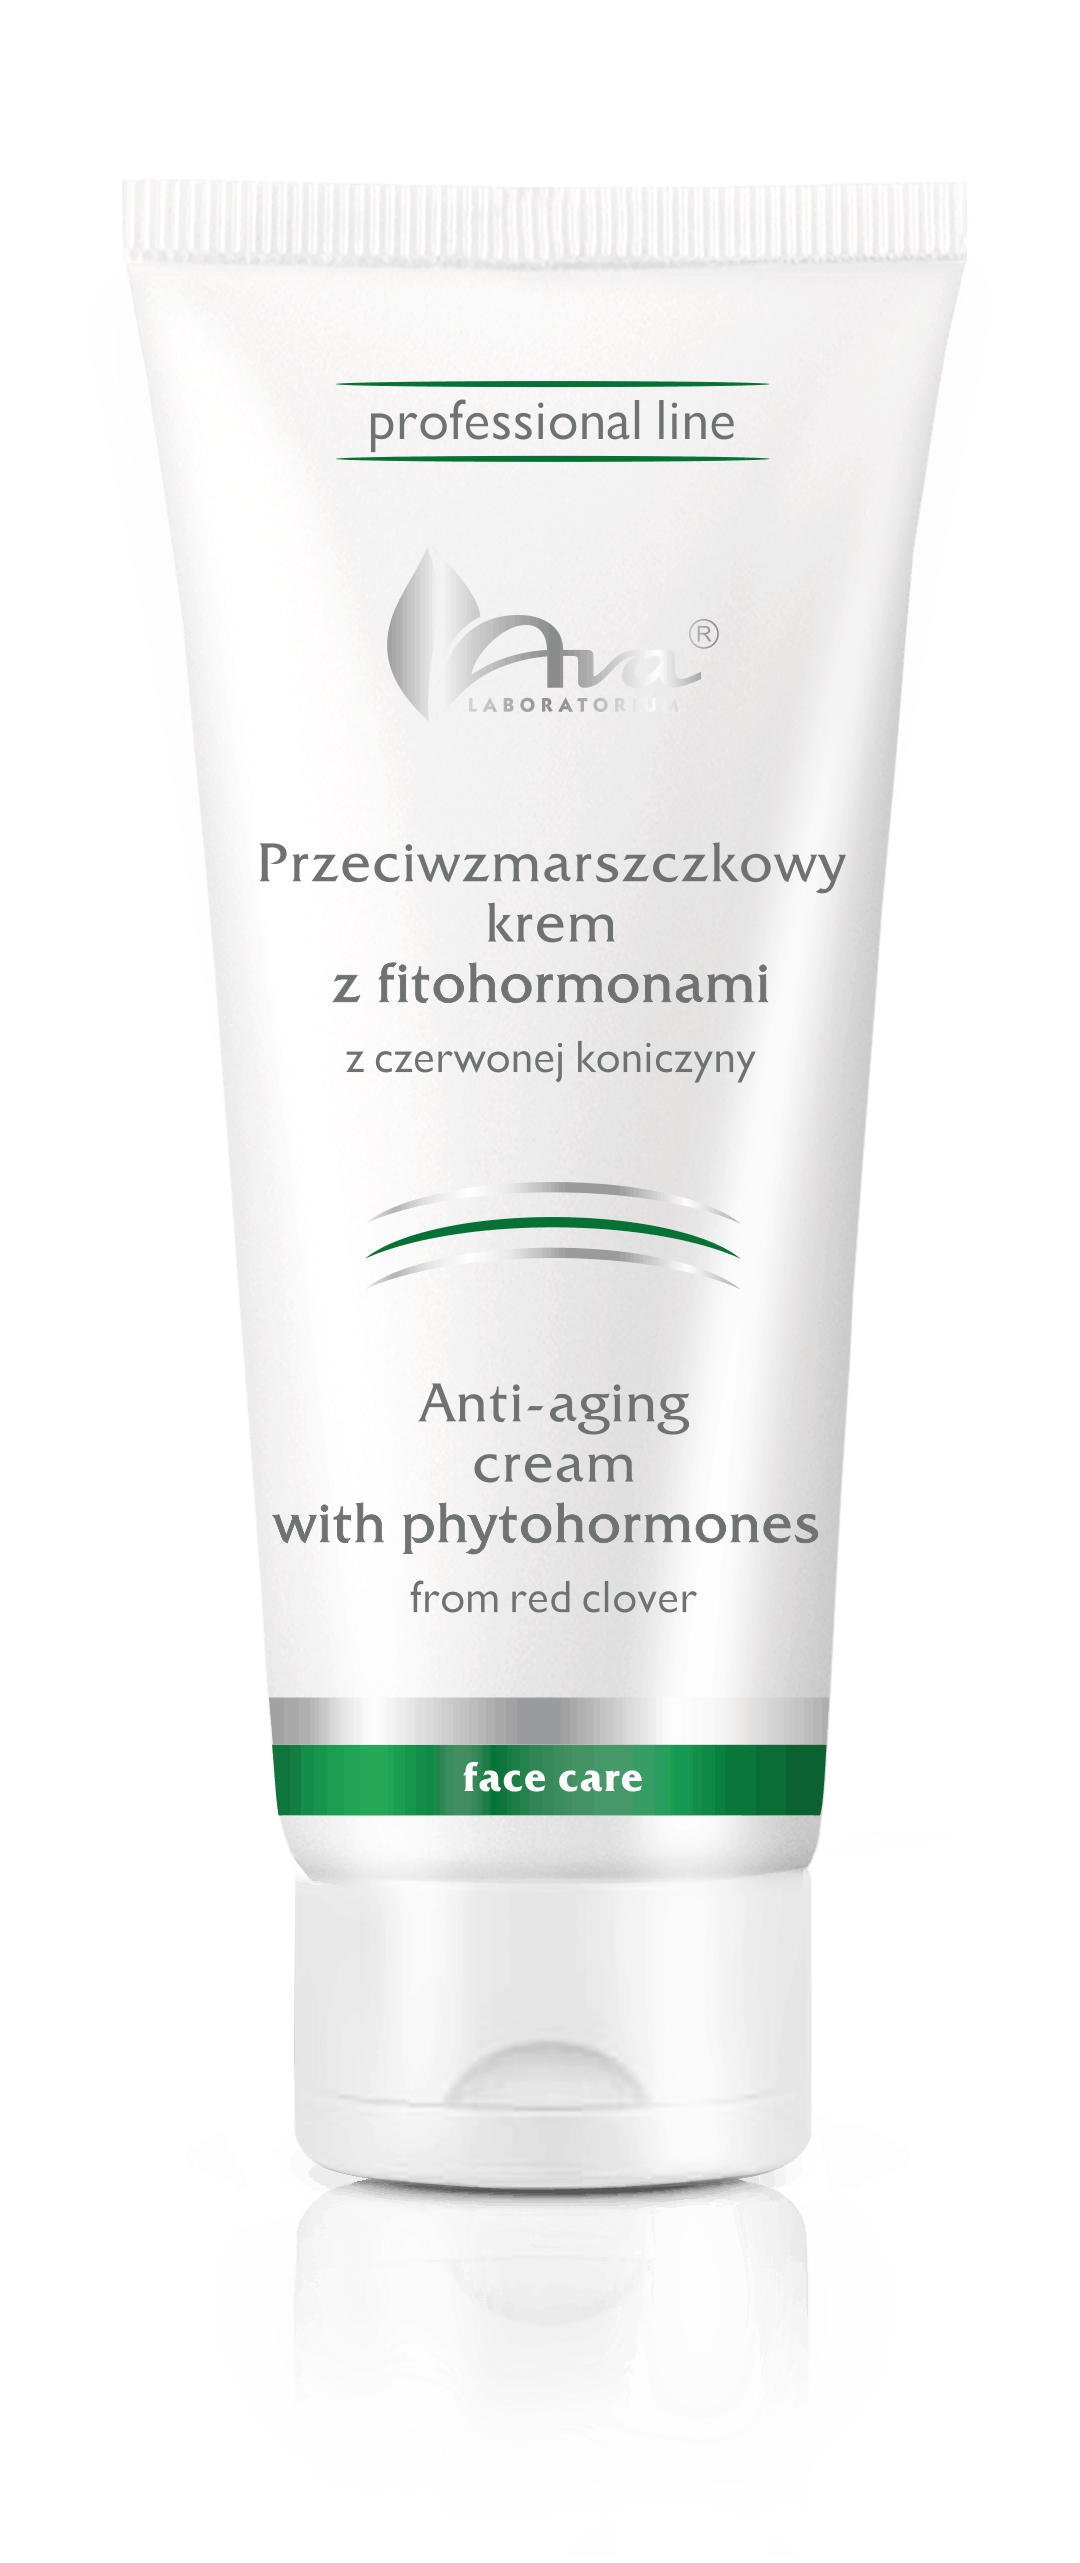 Anti-aging Cream with phytohormones